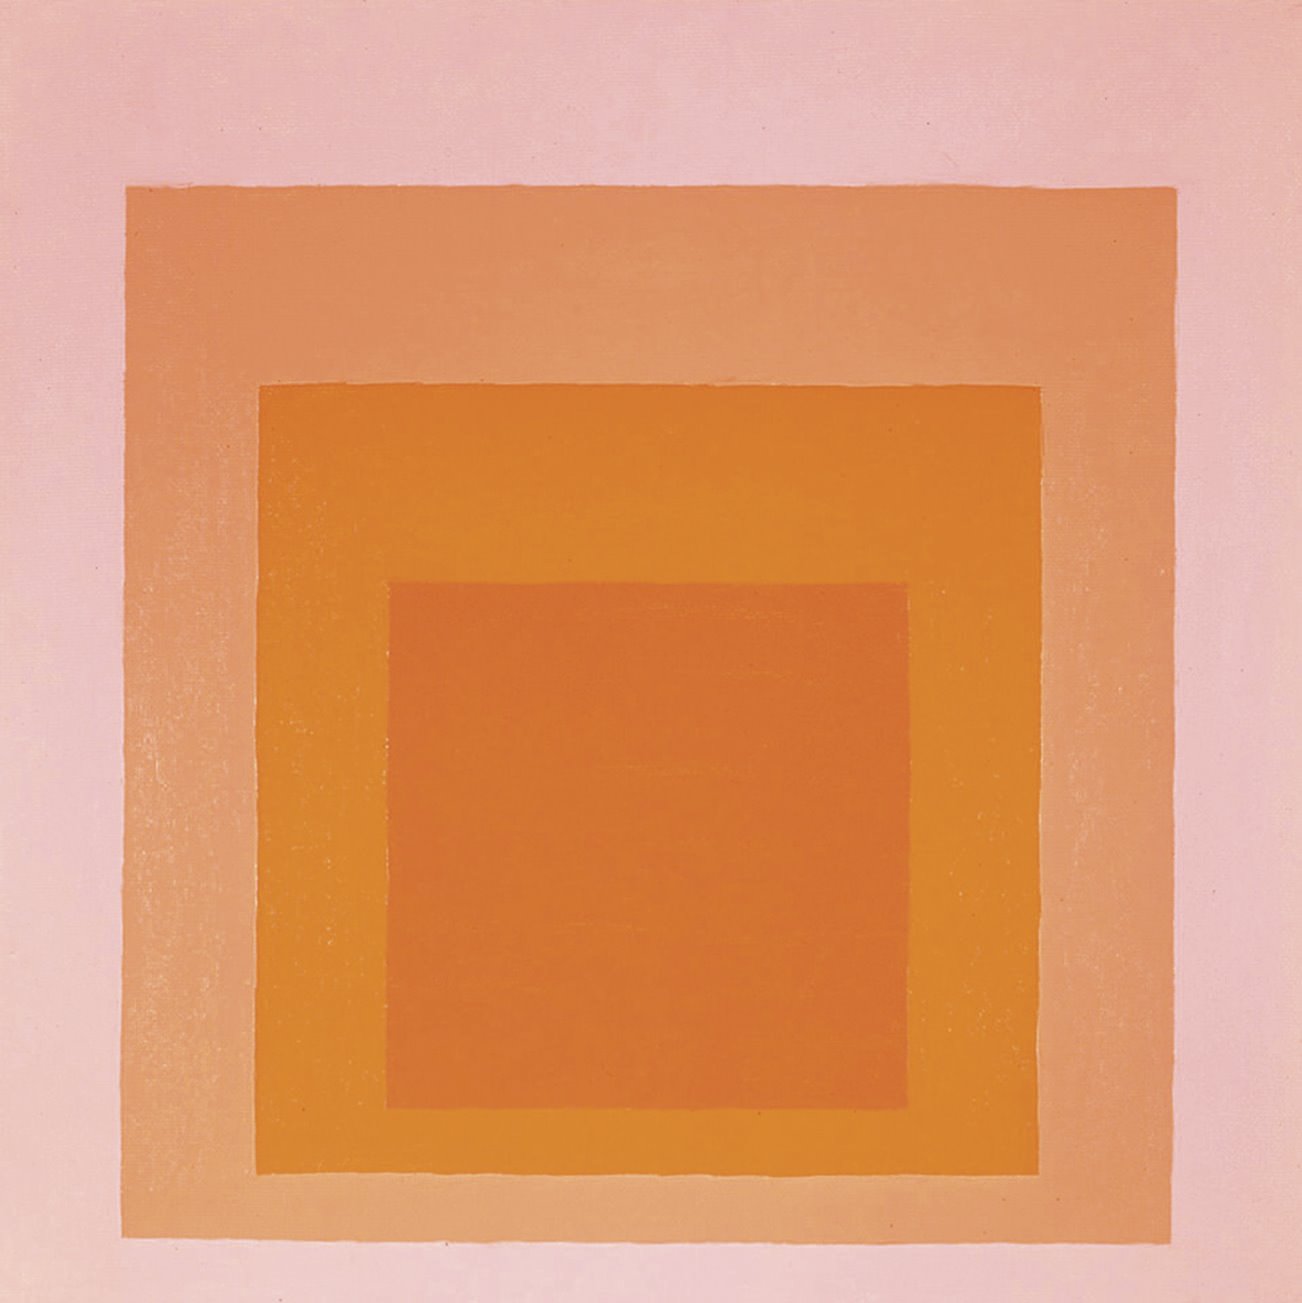 obra Homenaje al cuadrado de Josef Albers rosa y naranja